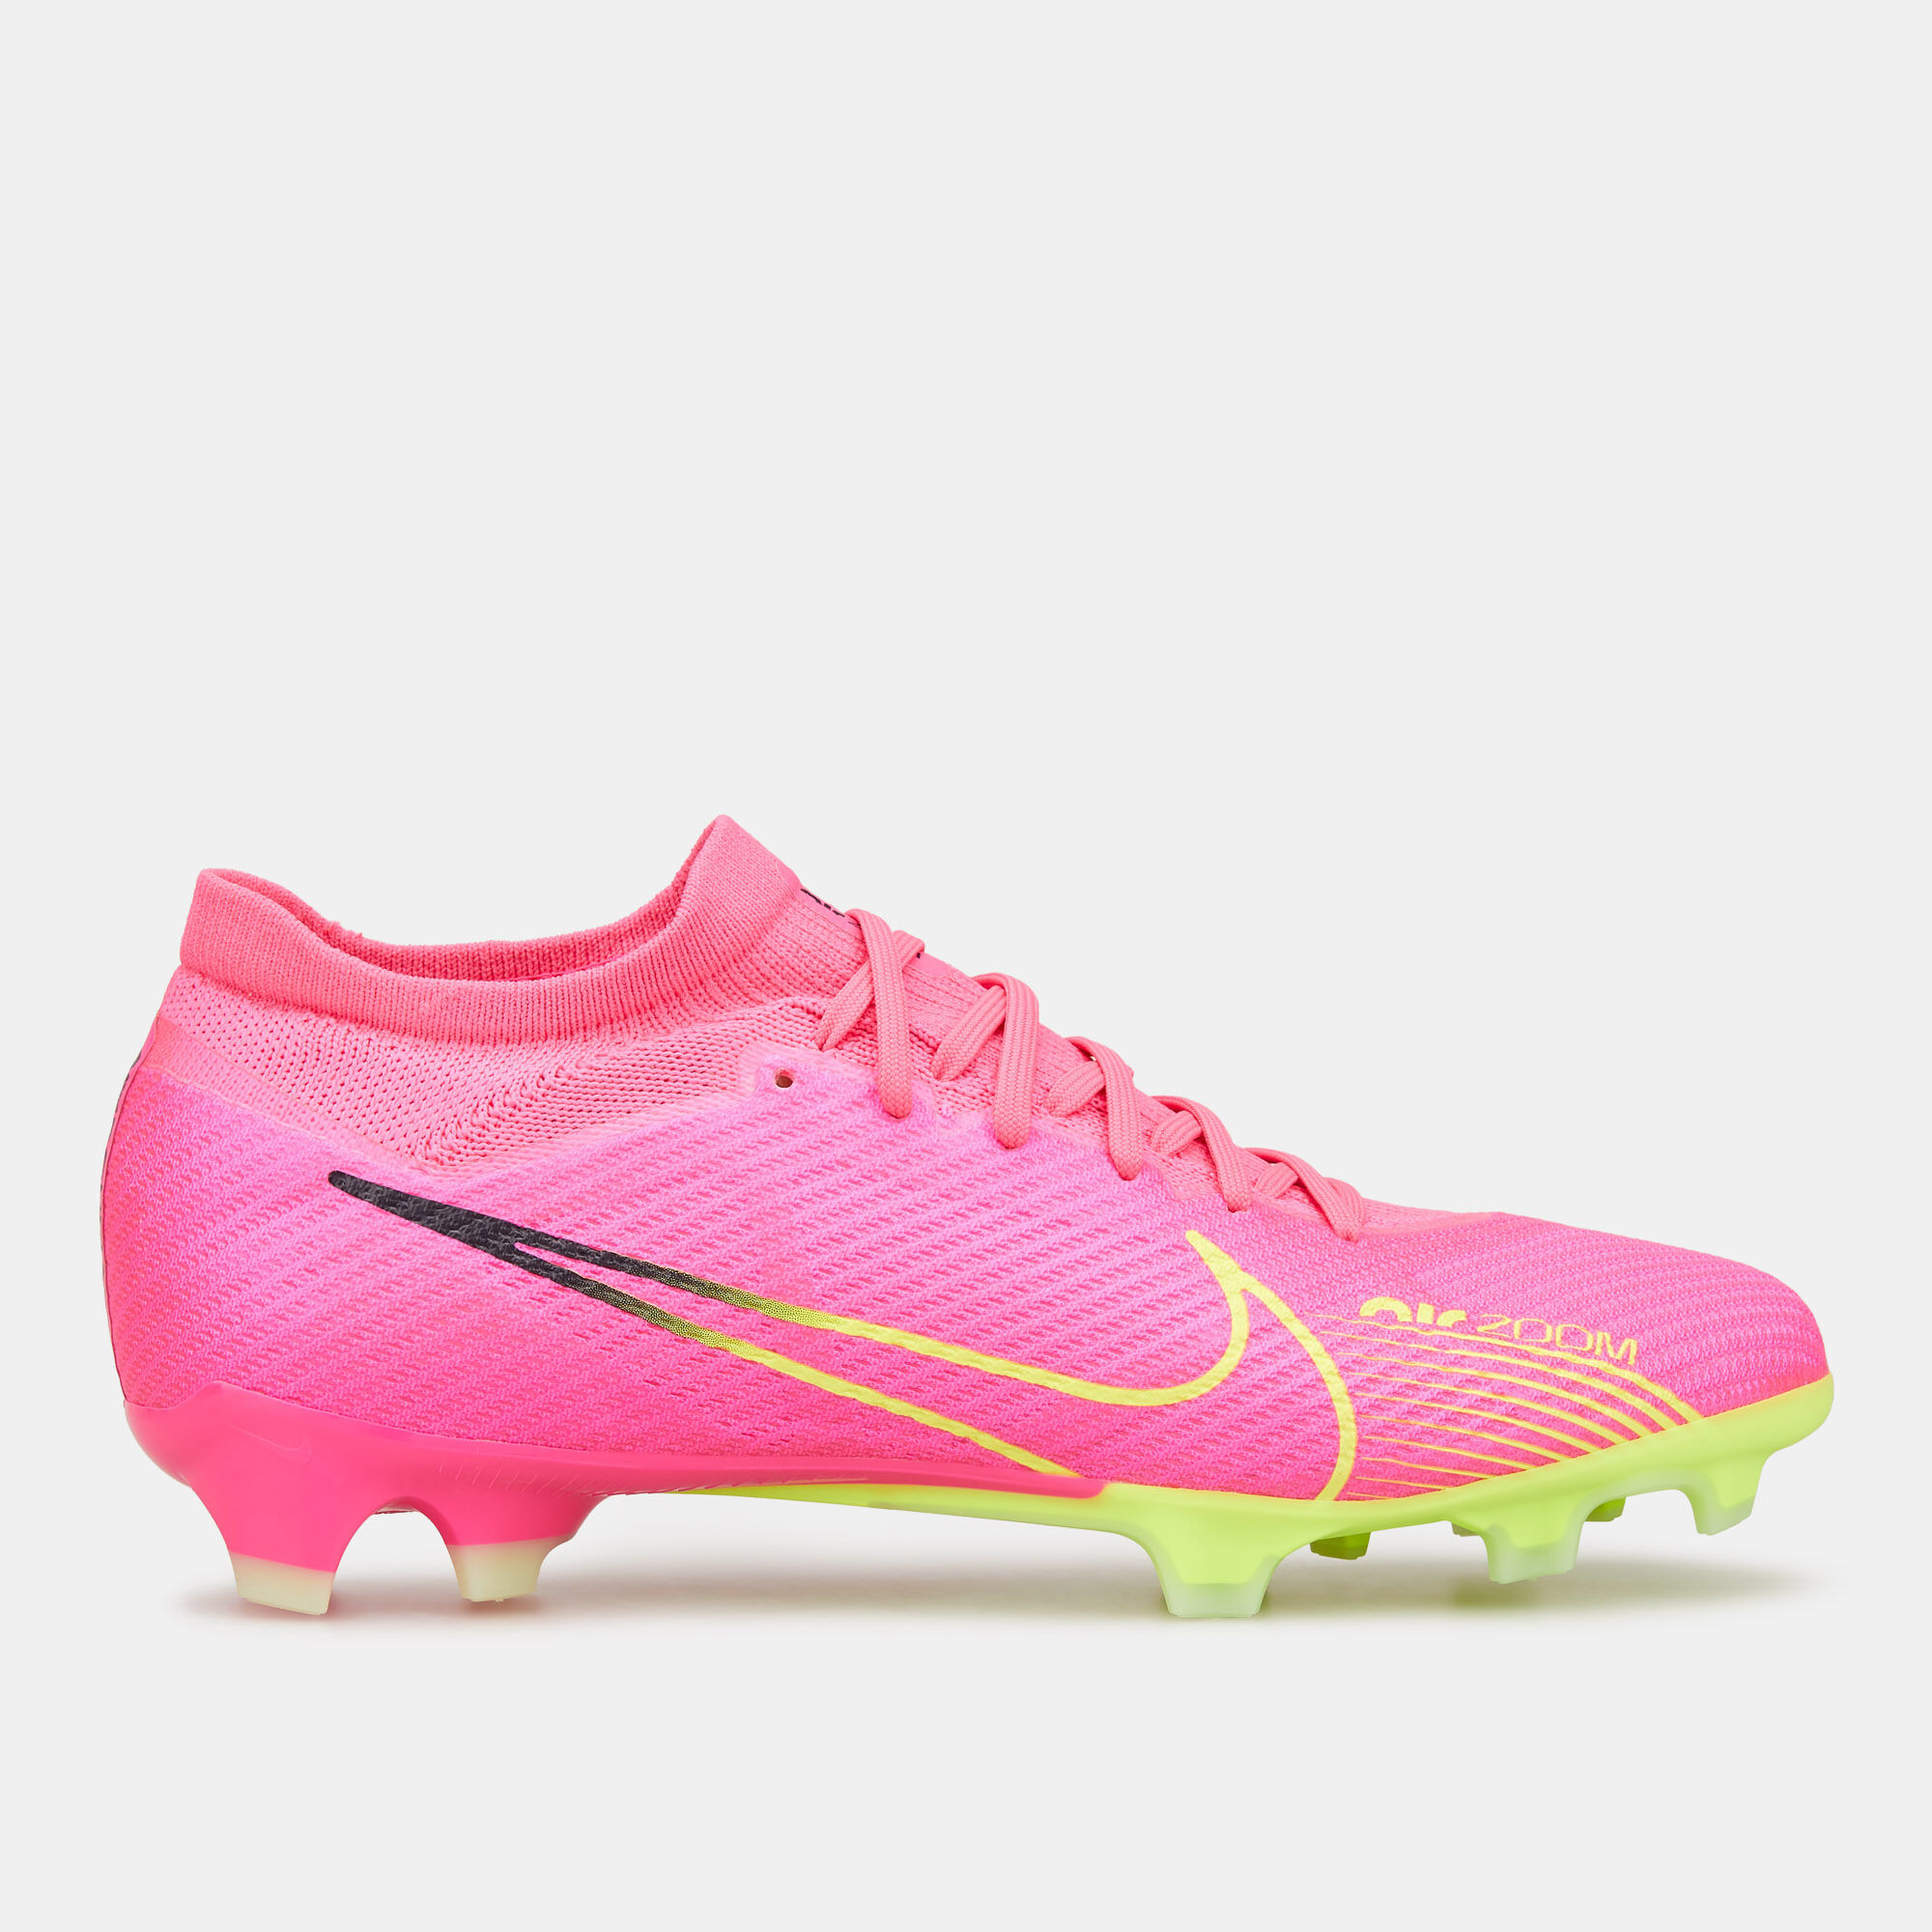 Buy SEGA Men's Spectra Football Shoes (Black, Numeric_7) at Amazon.in